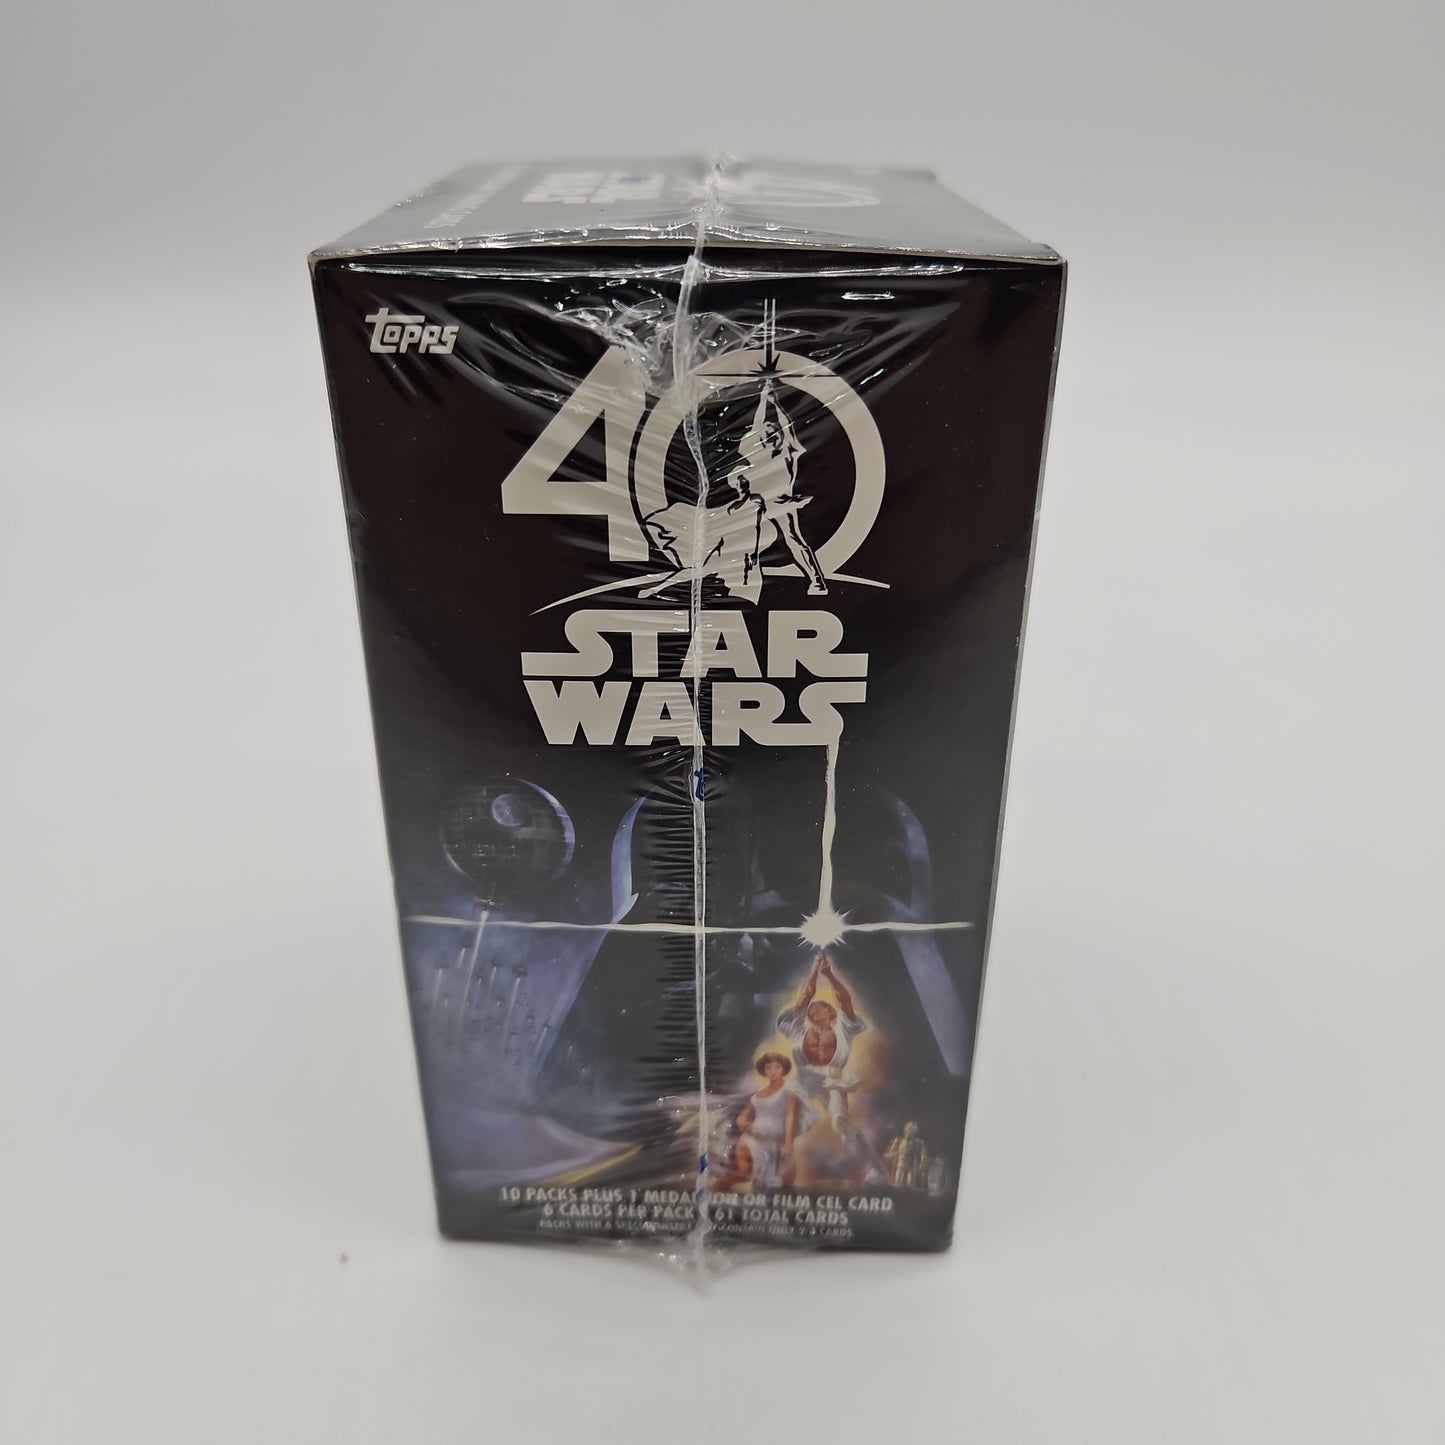 Star Wars 40th Anniversary Blaster Box New Sealed